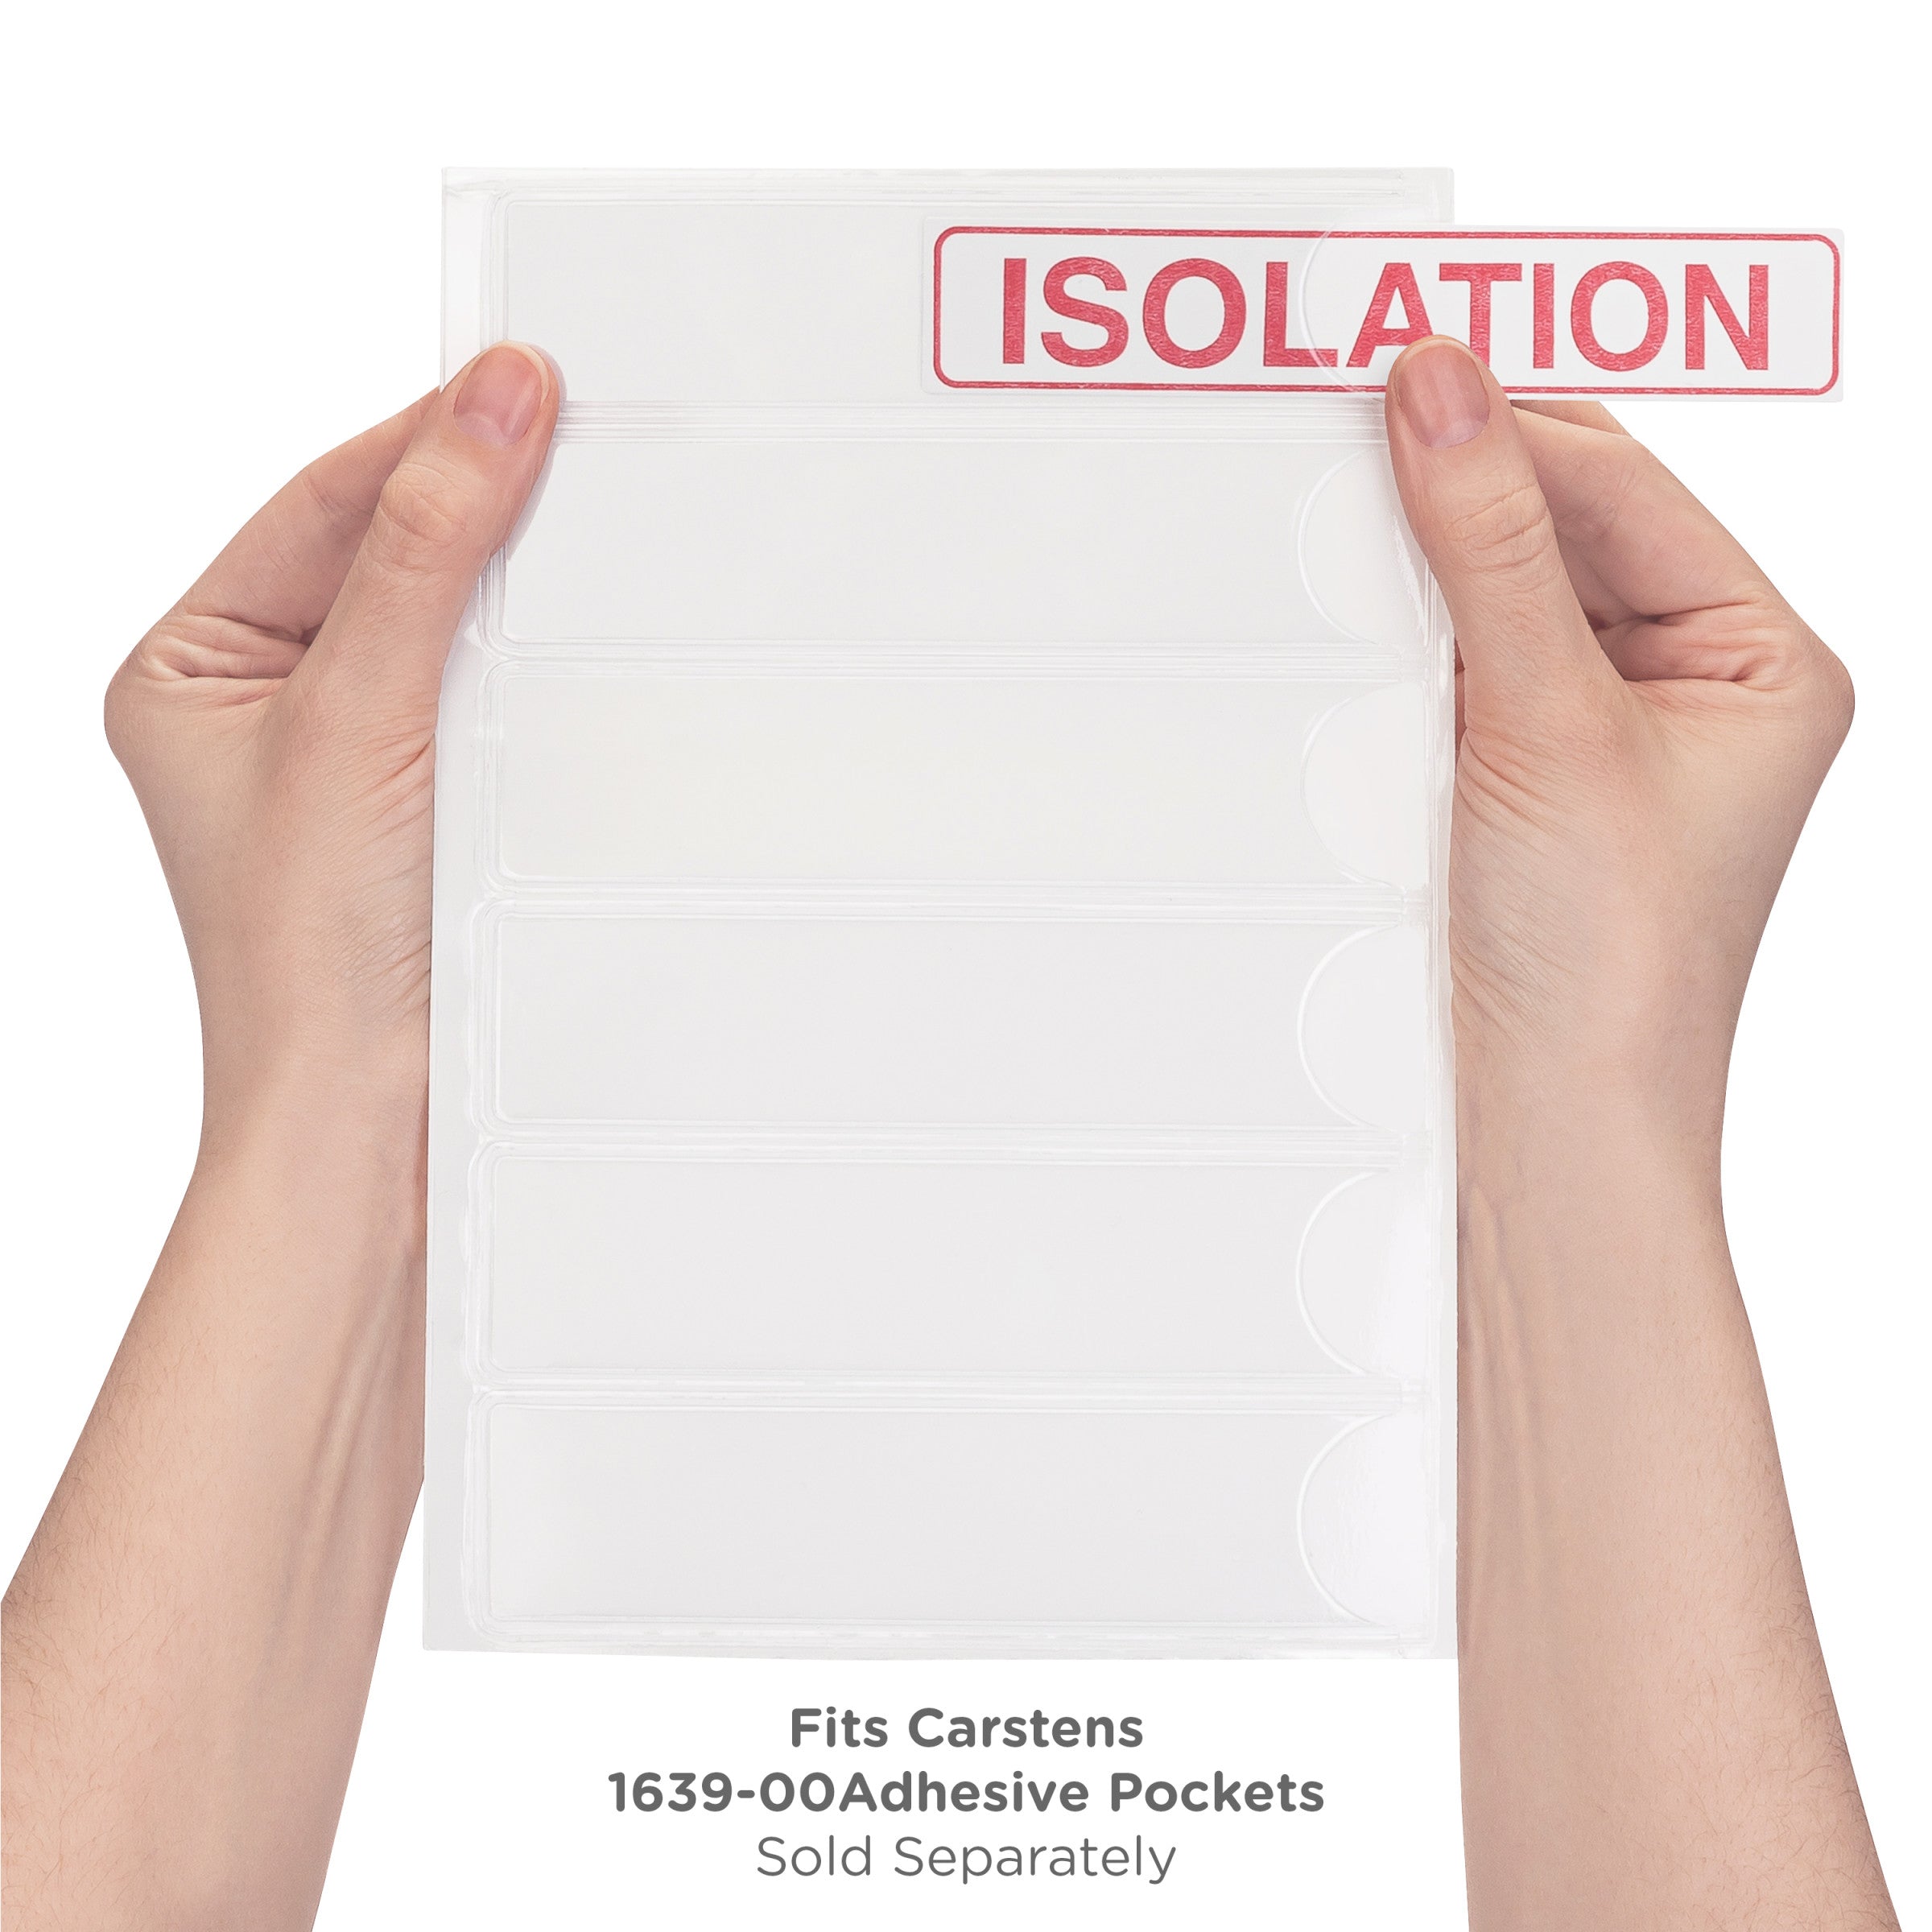 Isolation Alert/Instruction Card, White, W5.25" x H1" (100 pack)